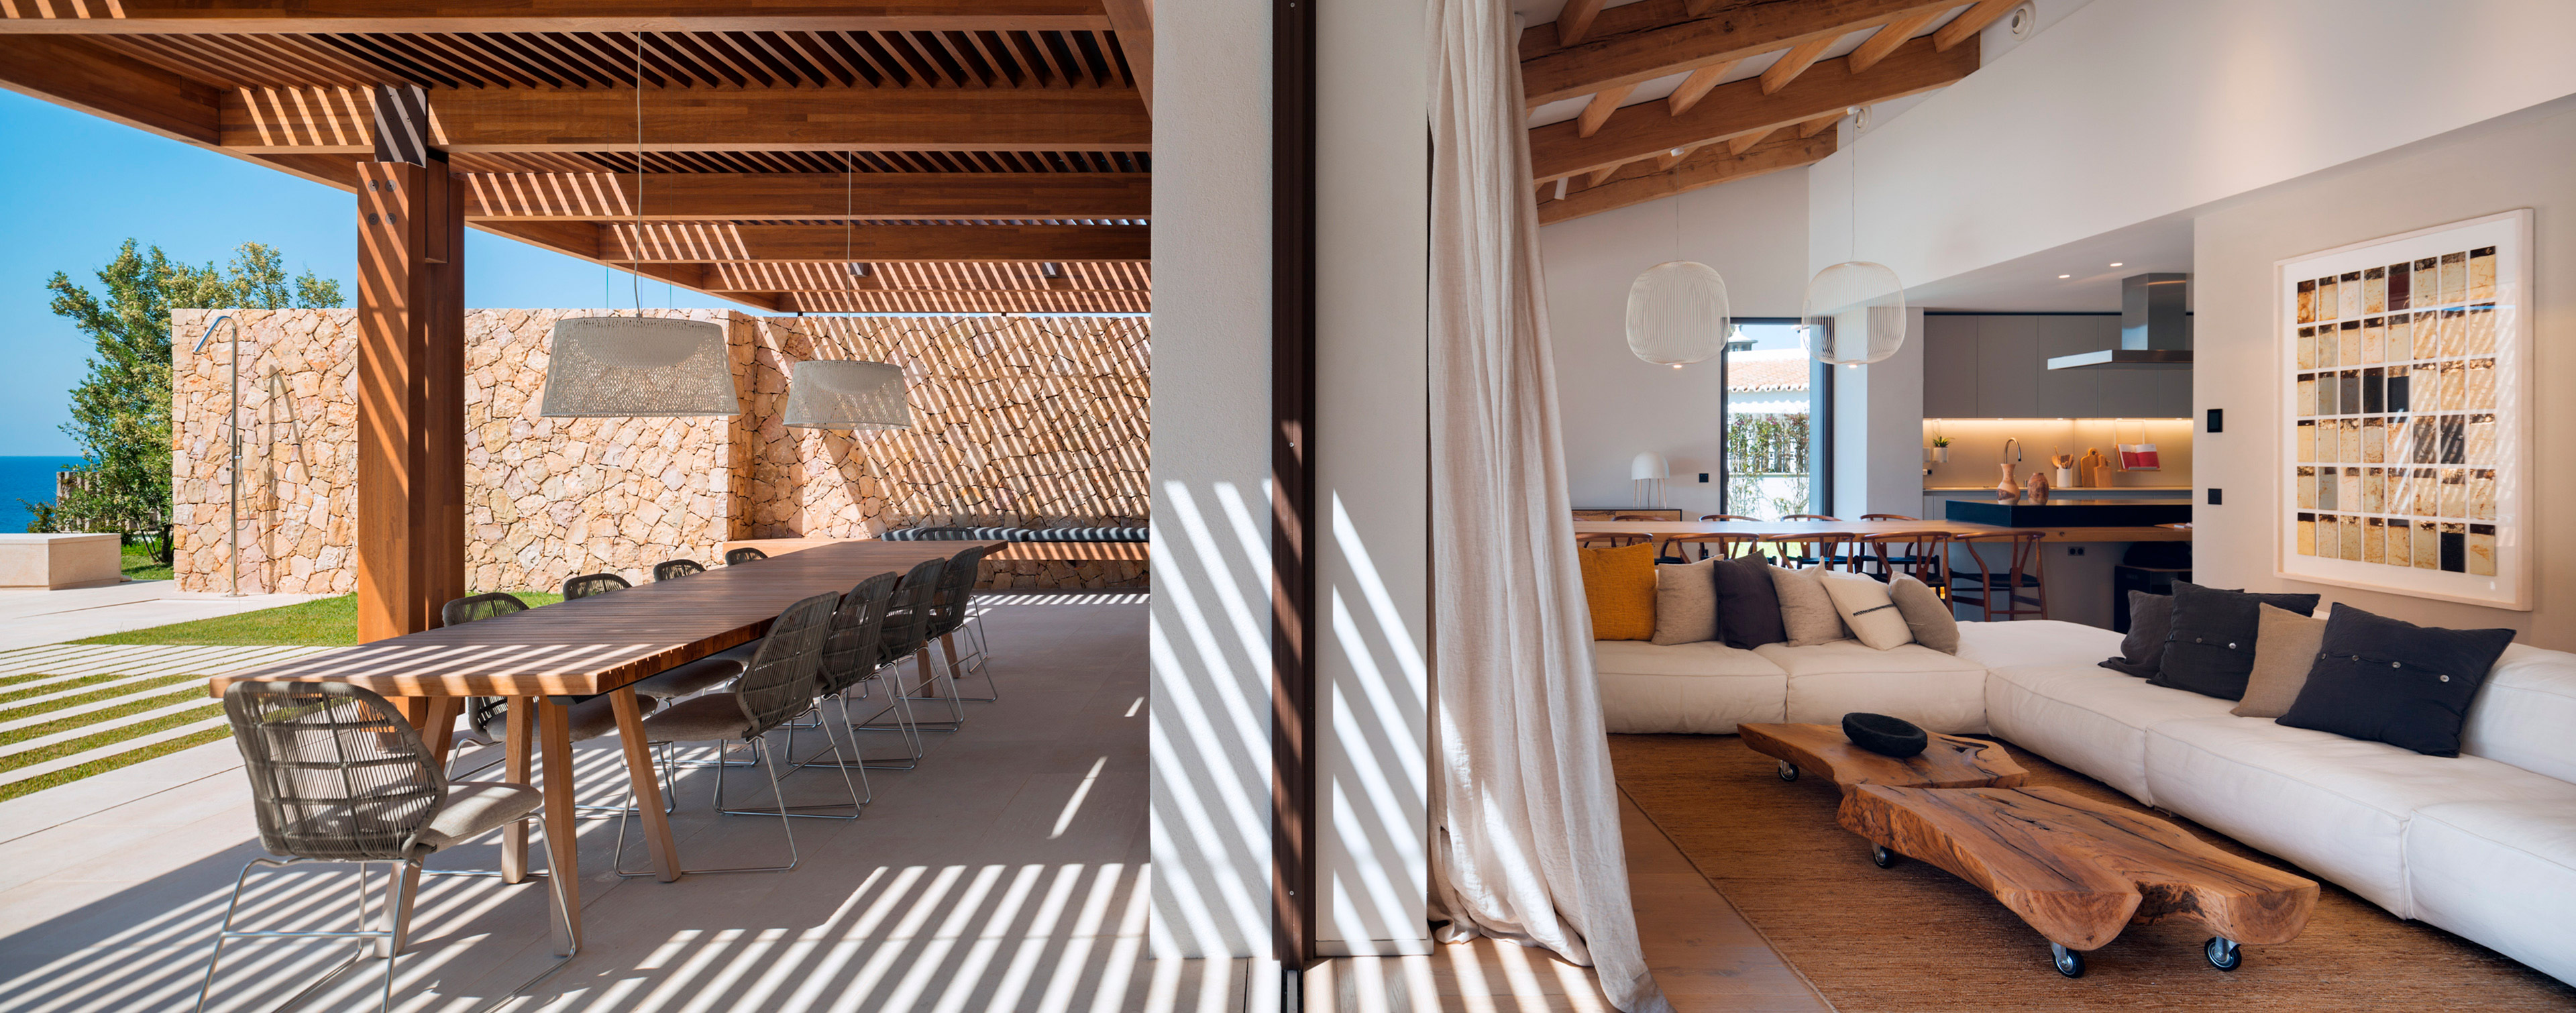 luv studio luxury architects algarve da rocha house IMG 03 - LUV Studio - Architecture et design - Barcelone